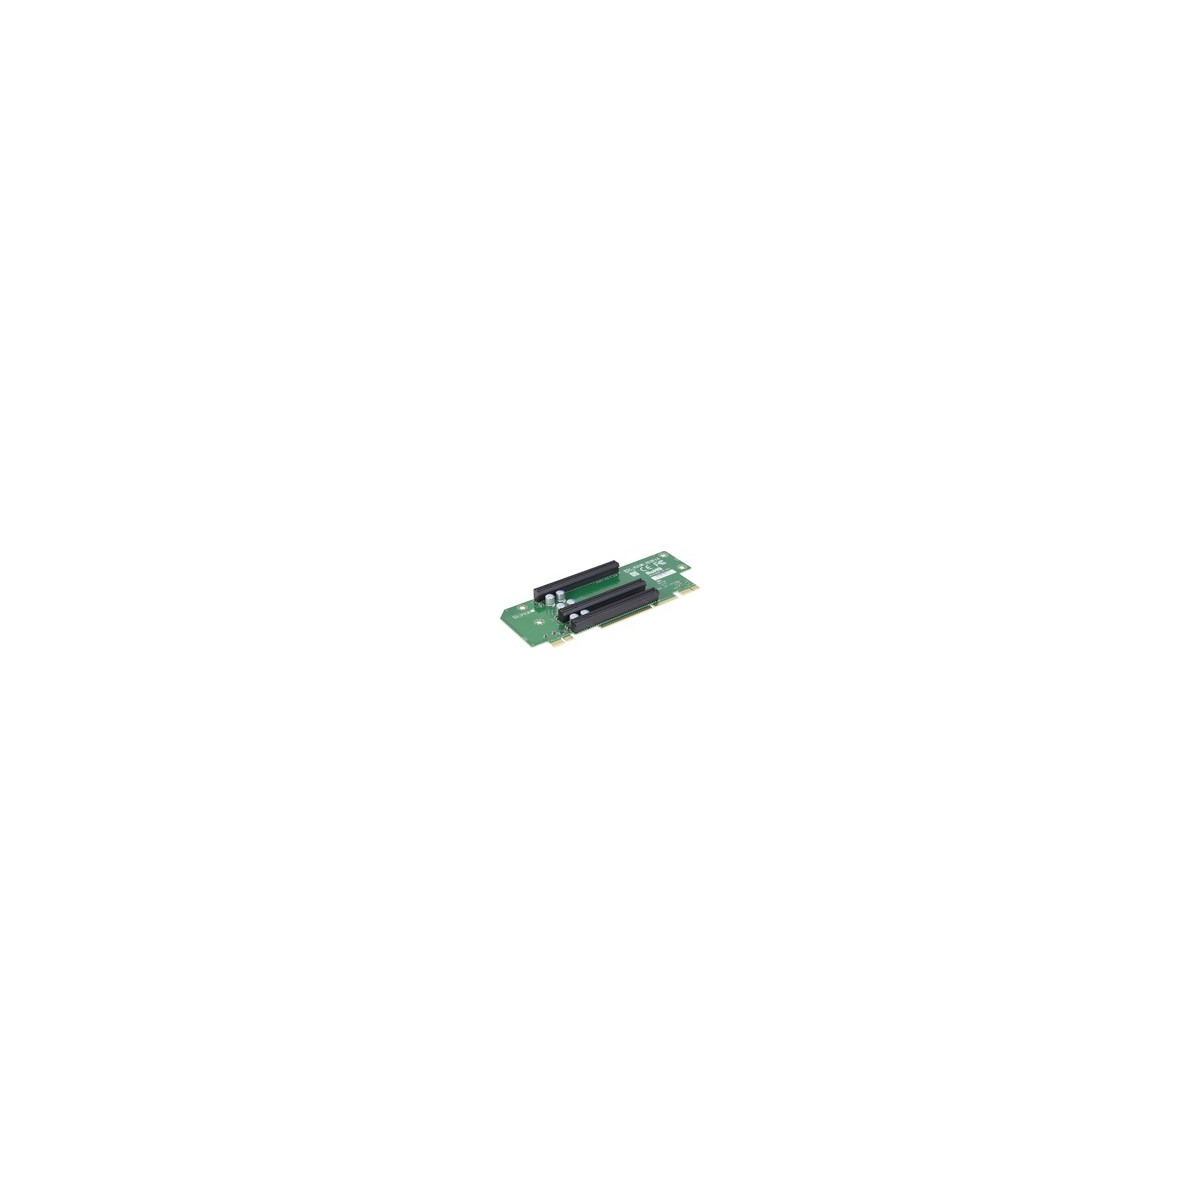 Supermicro Peripheral RSC-R2UW-002 - PCI - Green